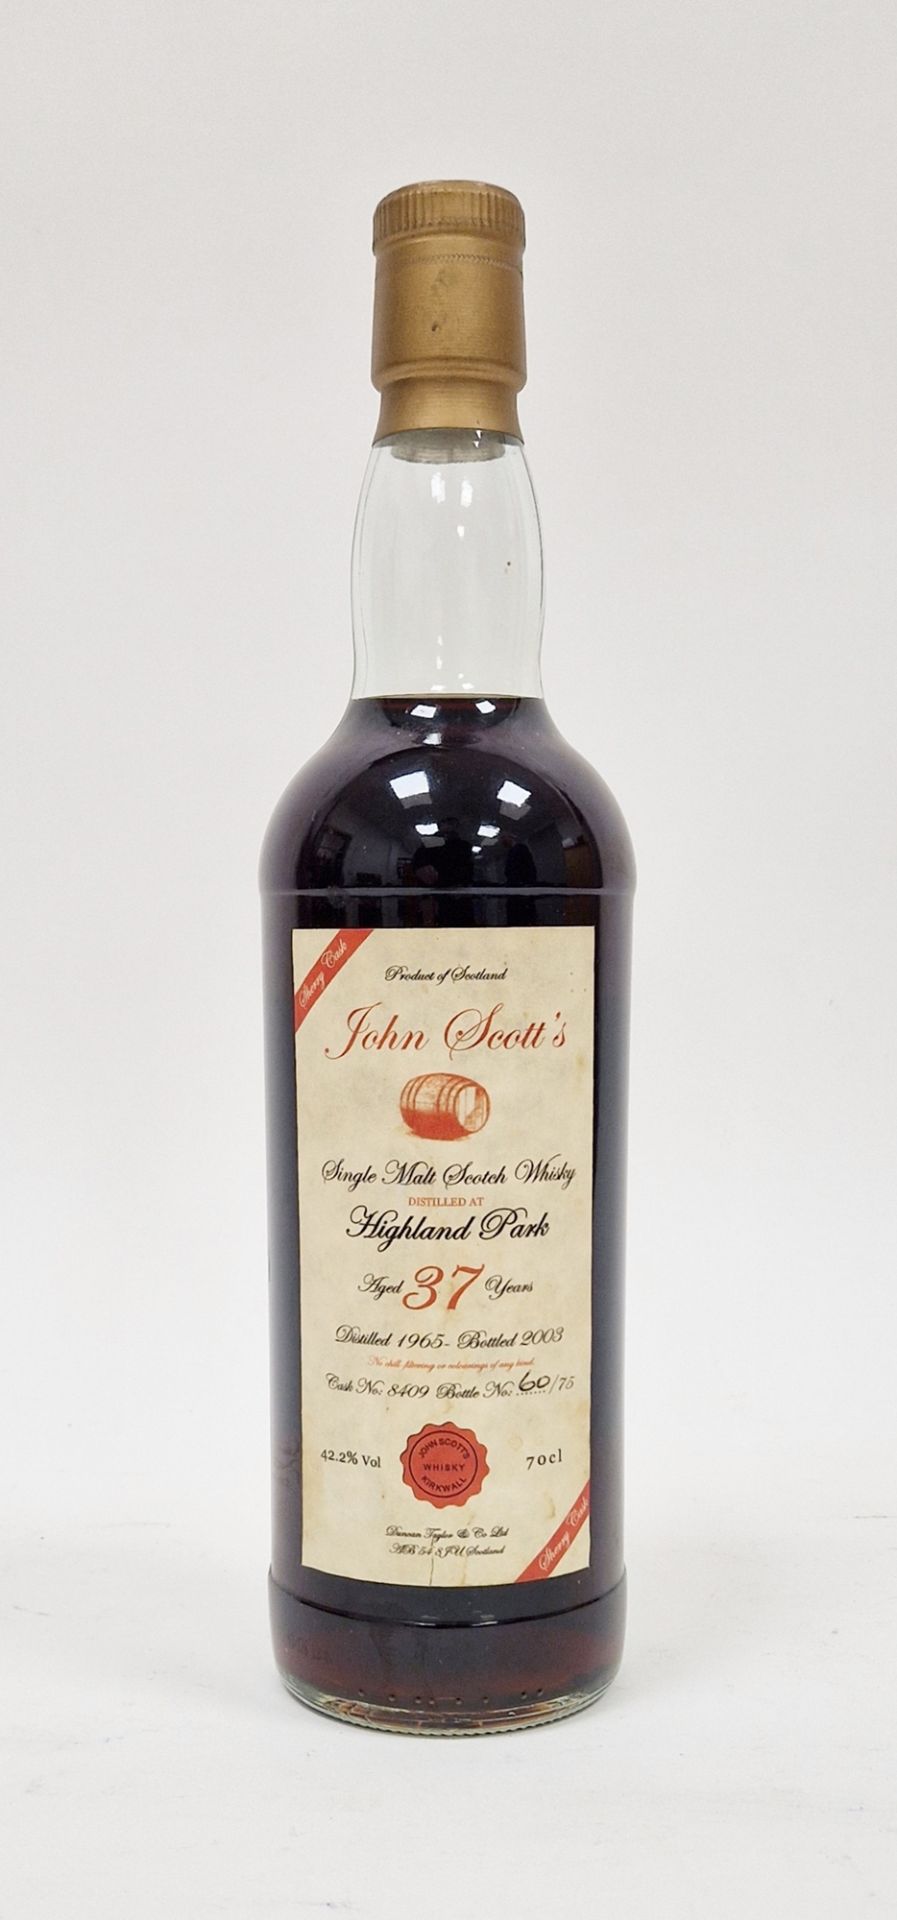 Highland Park 1965 37 year old single malt Scotch whisky, bottled in 2003 by John Scott's, bottle